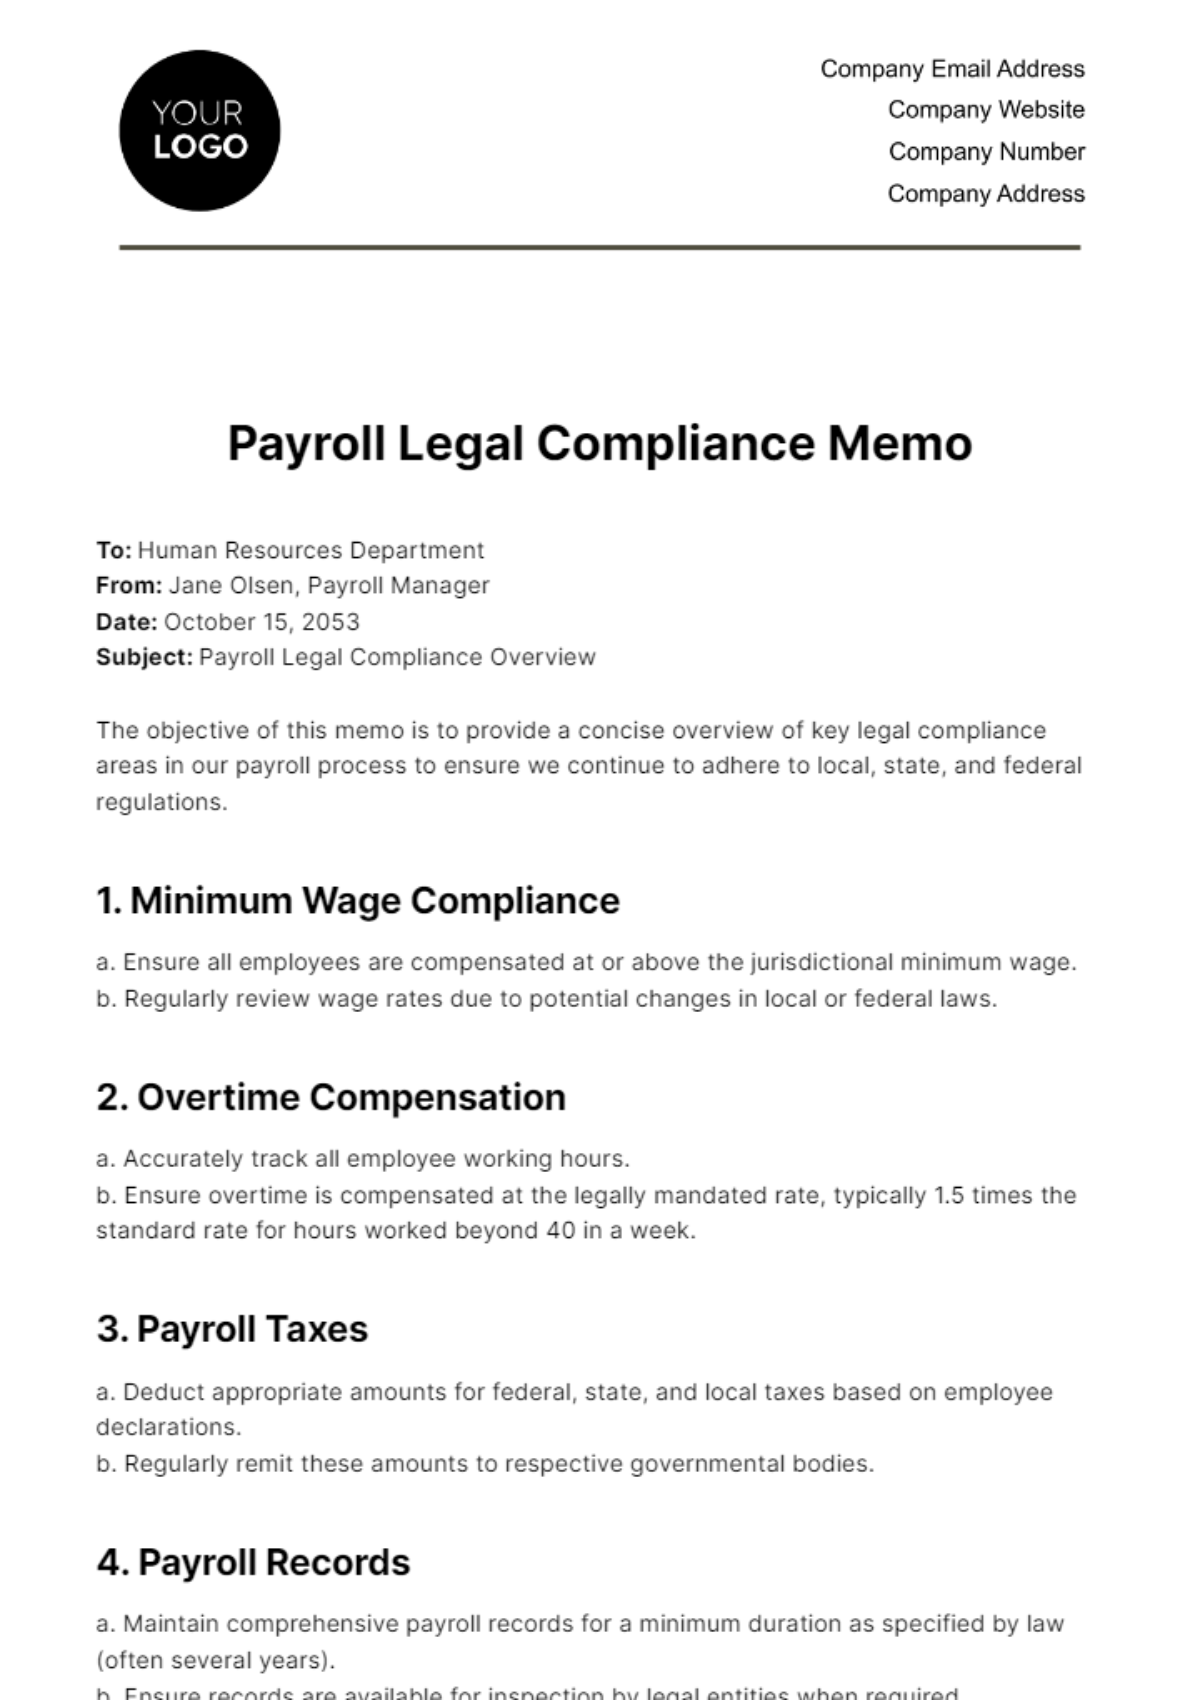 Payroll Legal Compliance Memo HR Template